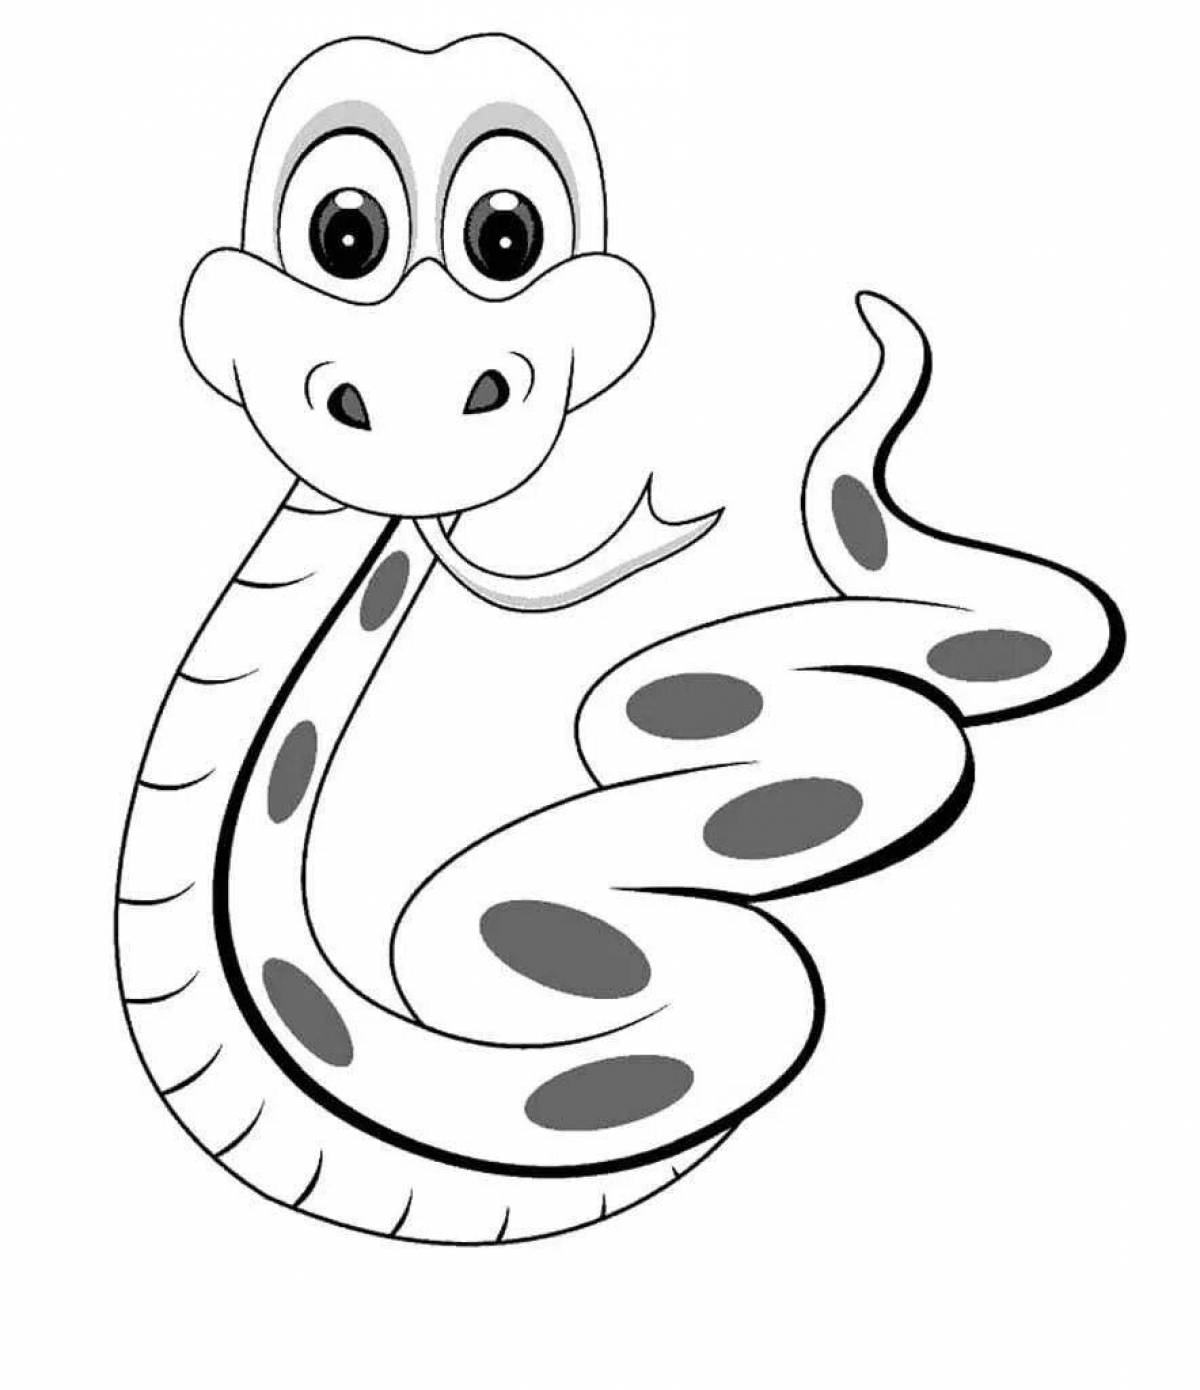 Snake for children 3 4 years old #3